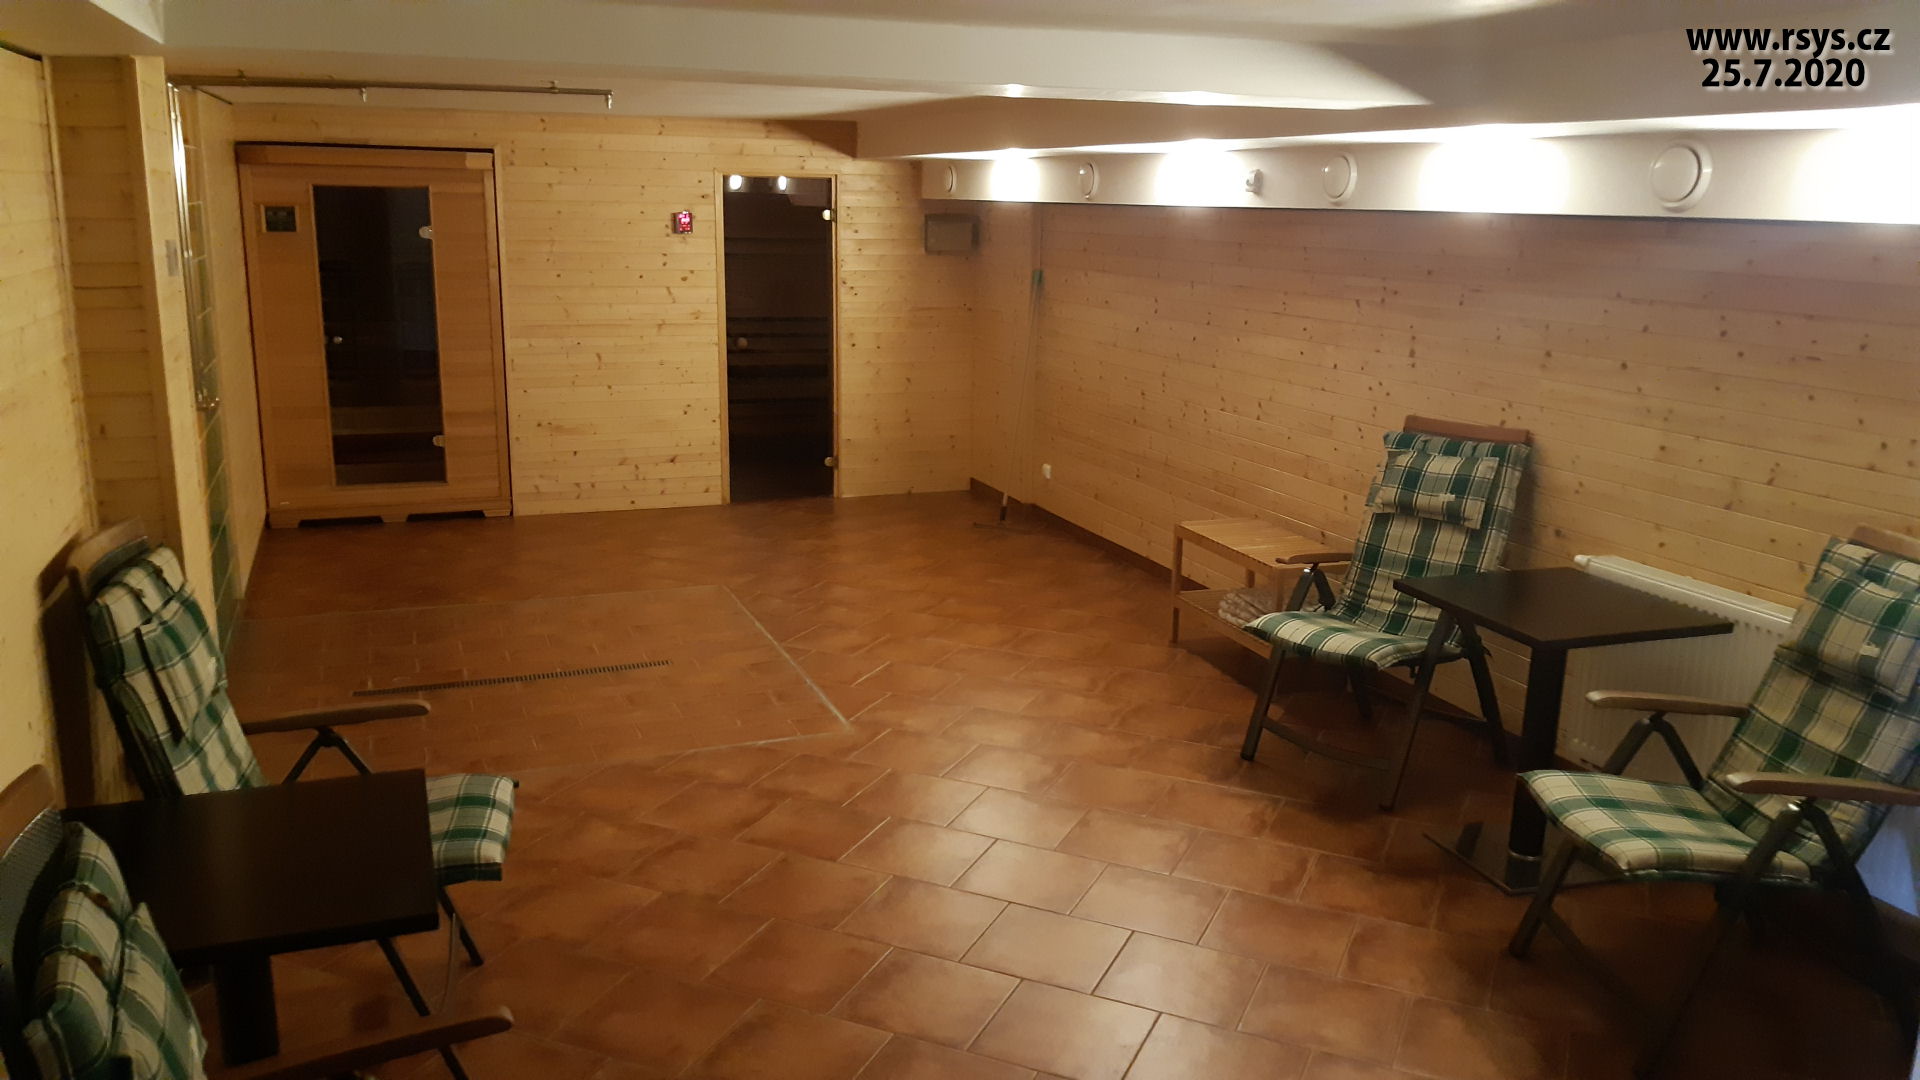 Masarykova chata - dvě sauny a odpočívárna